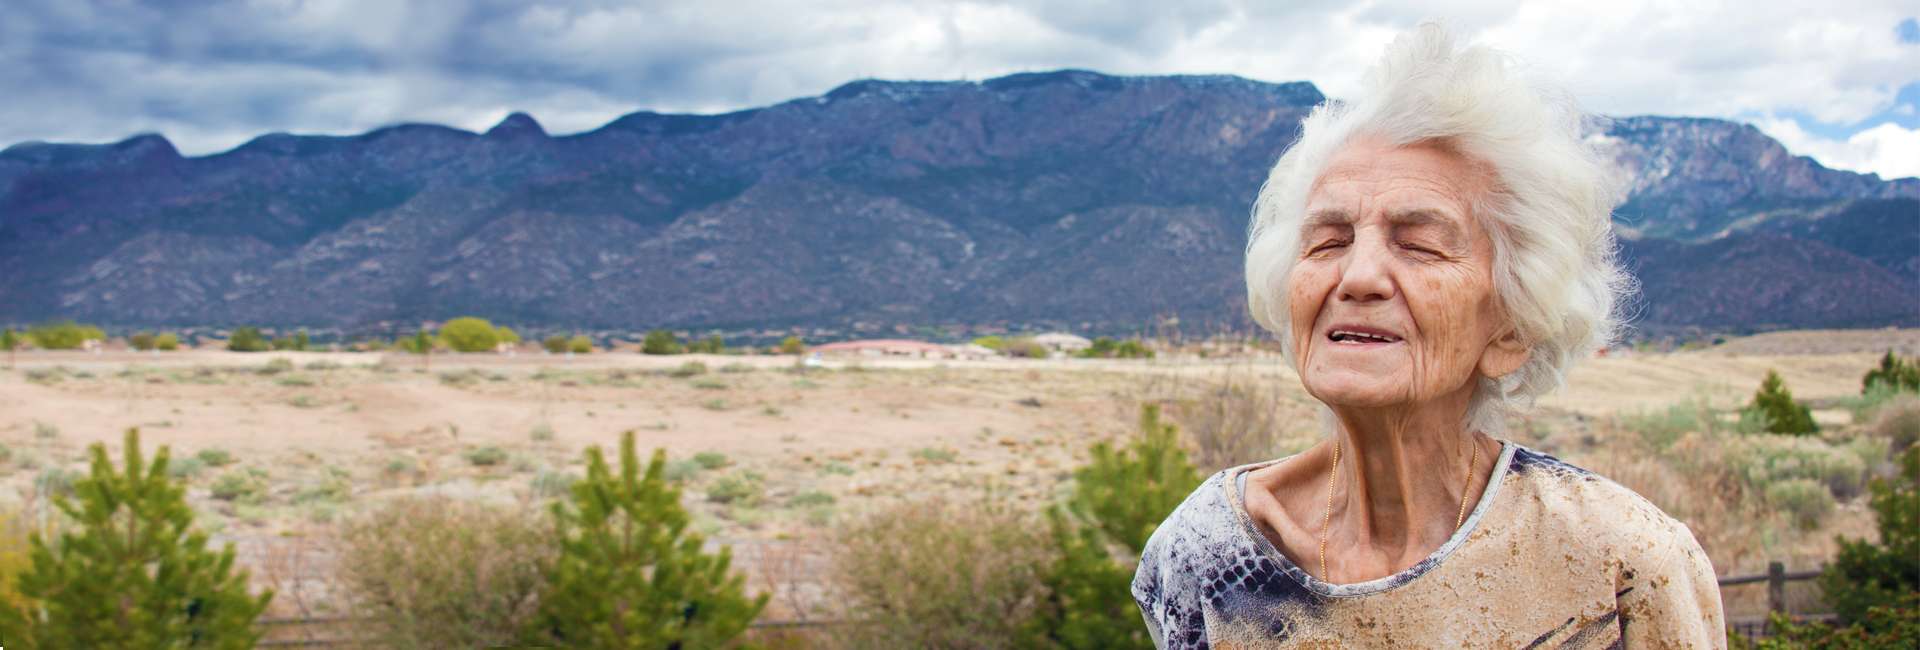 Elderly woman enjoying the breeze in the desert.